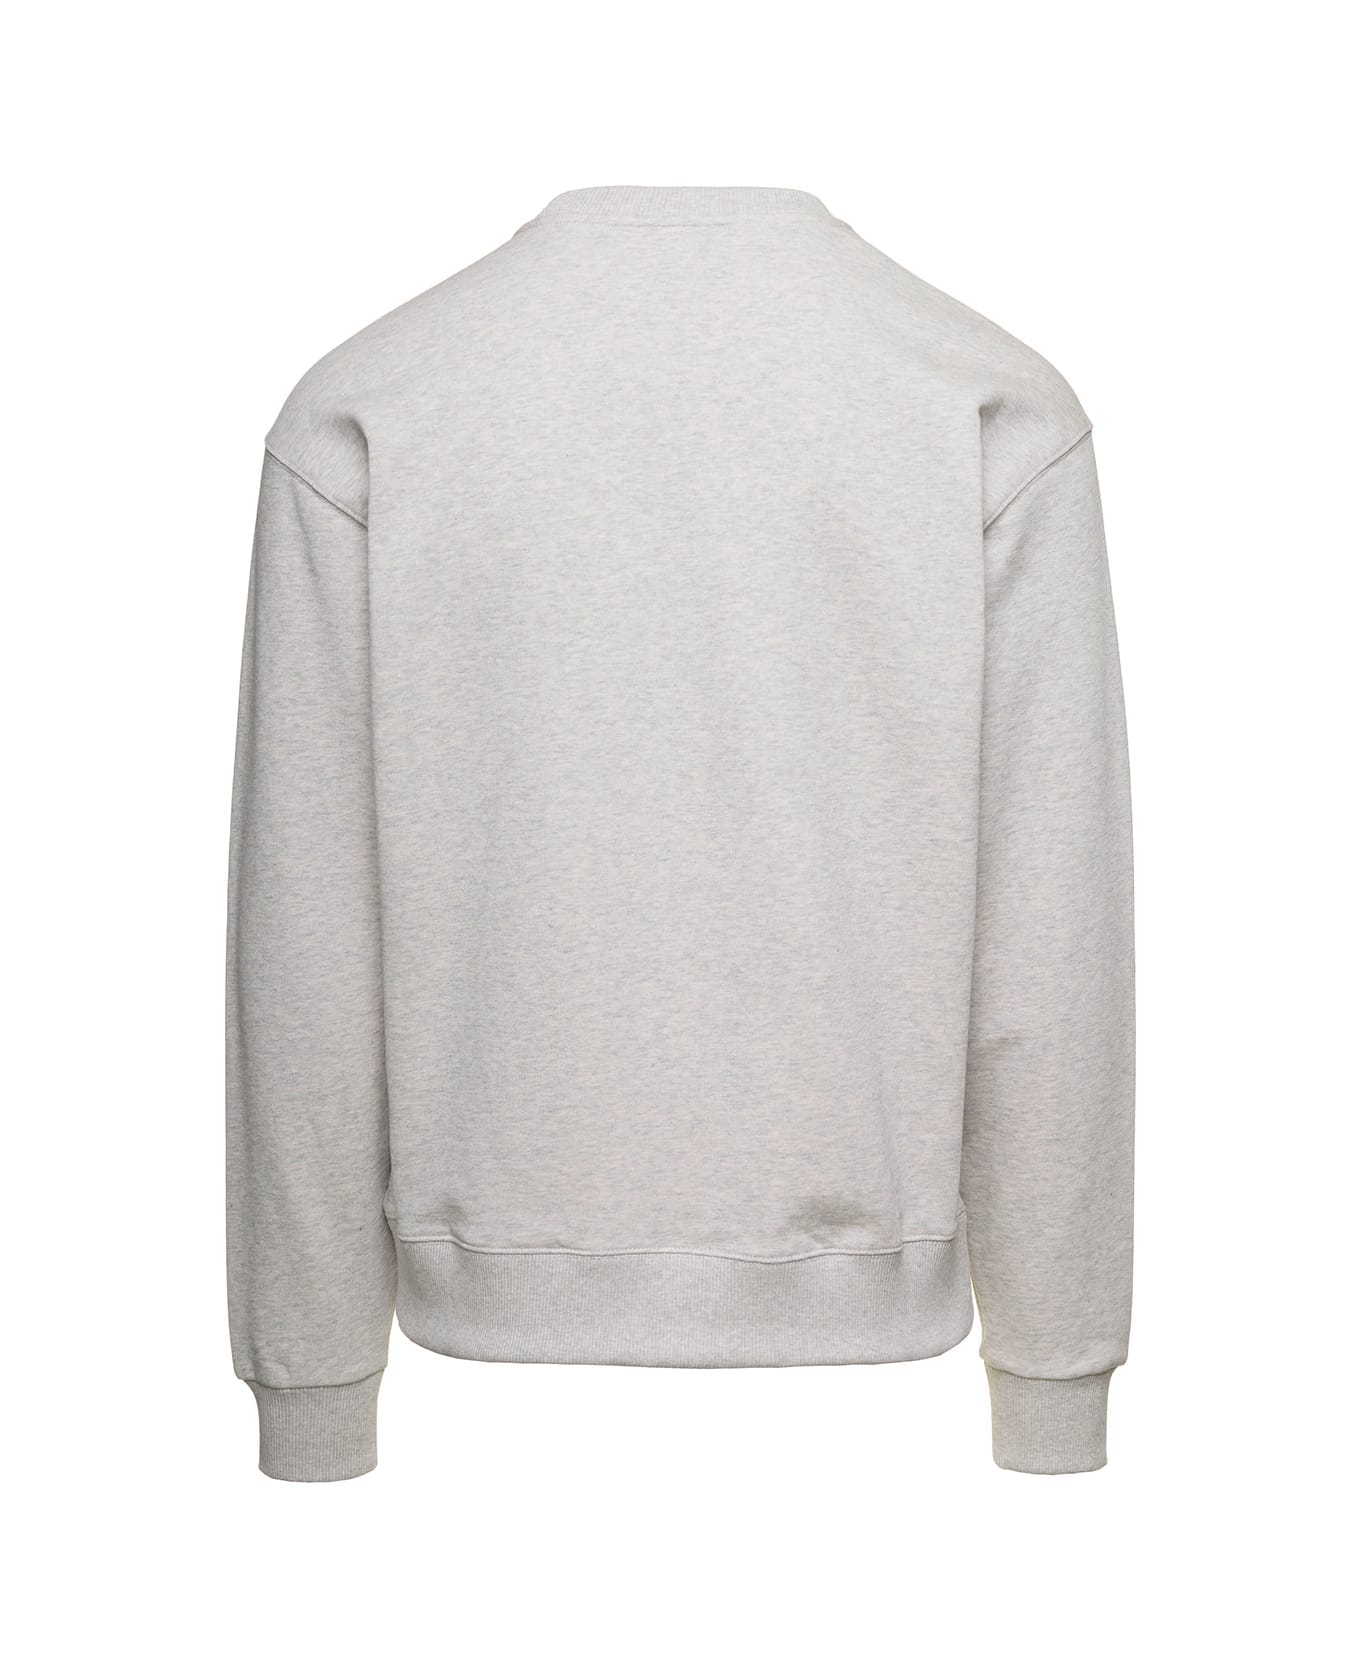 Kenzo Grey Crewneck Sweatshirt With Logo Patch In Cotton Man - Grey